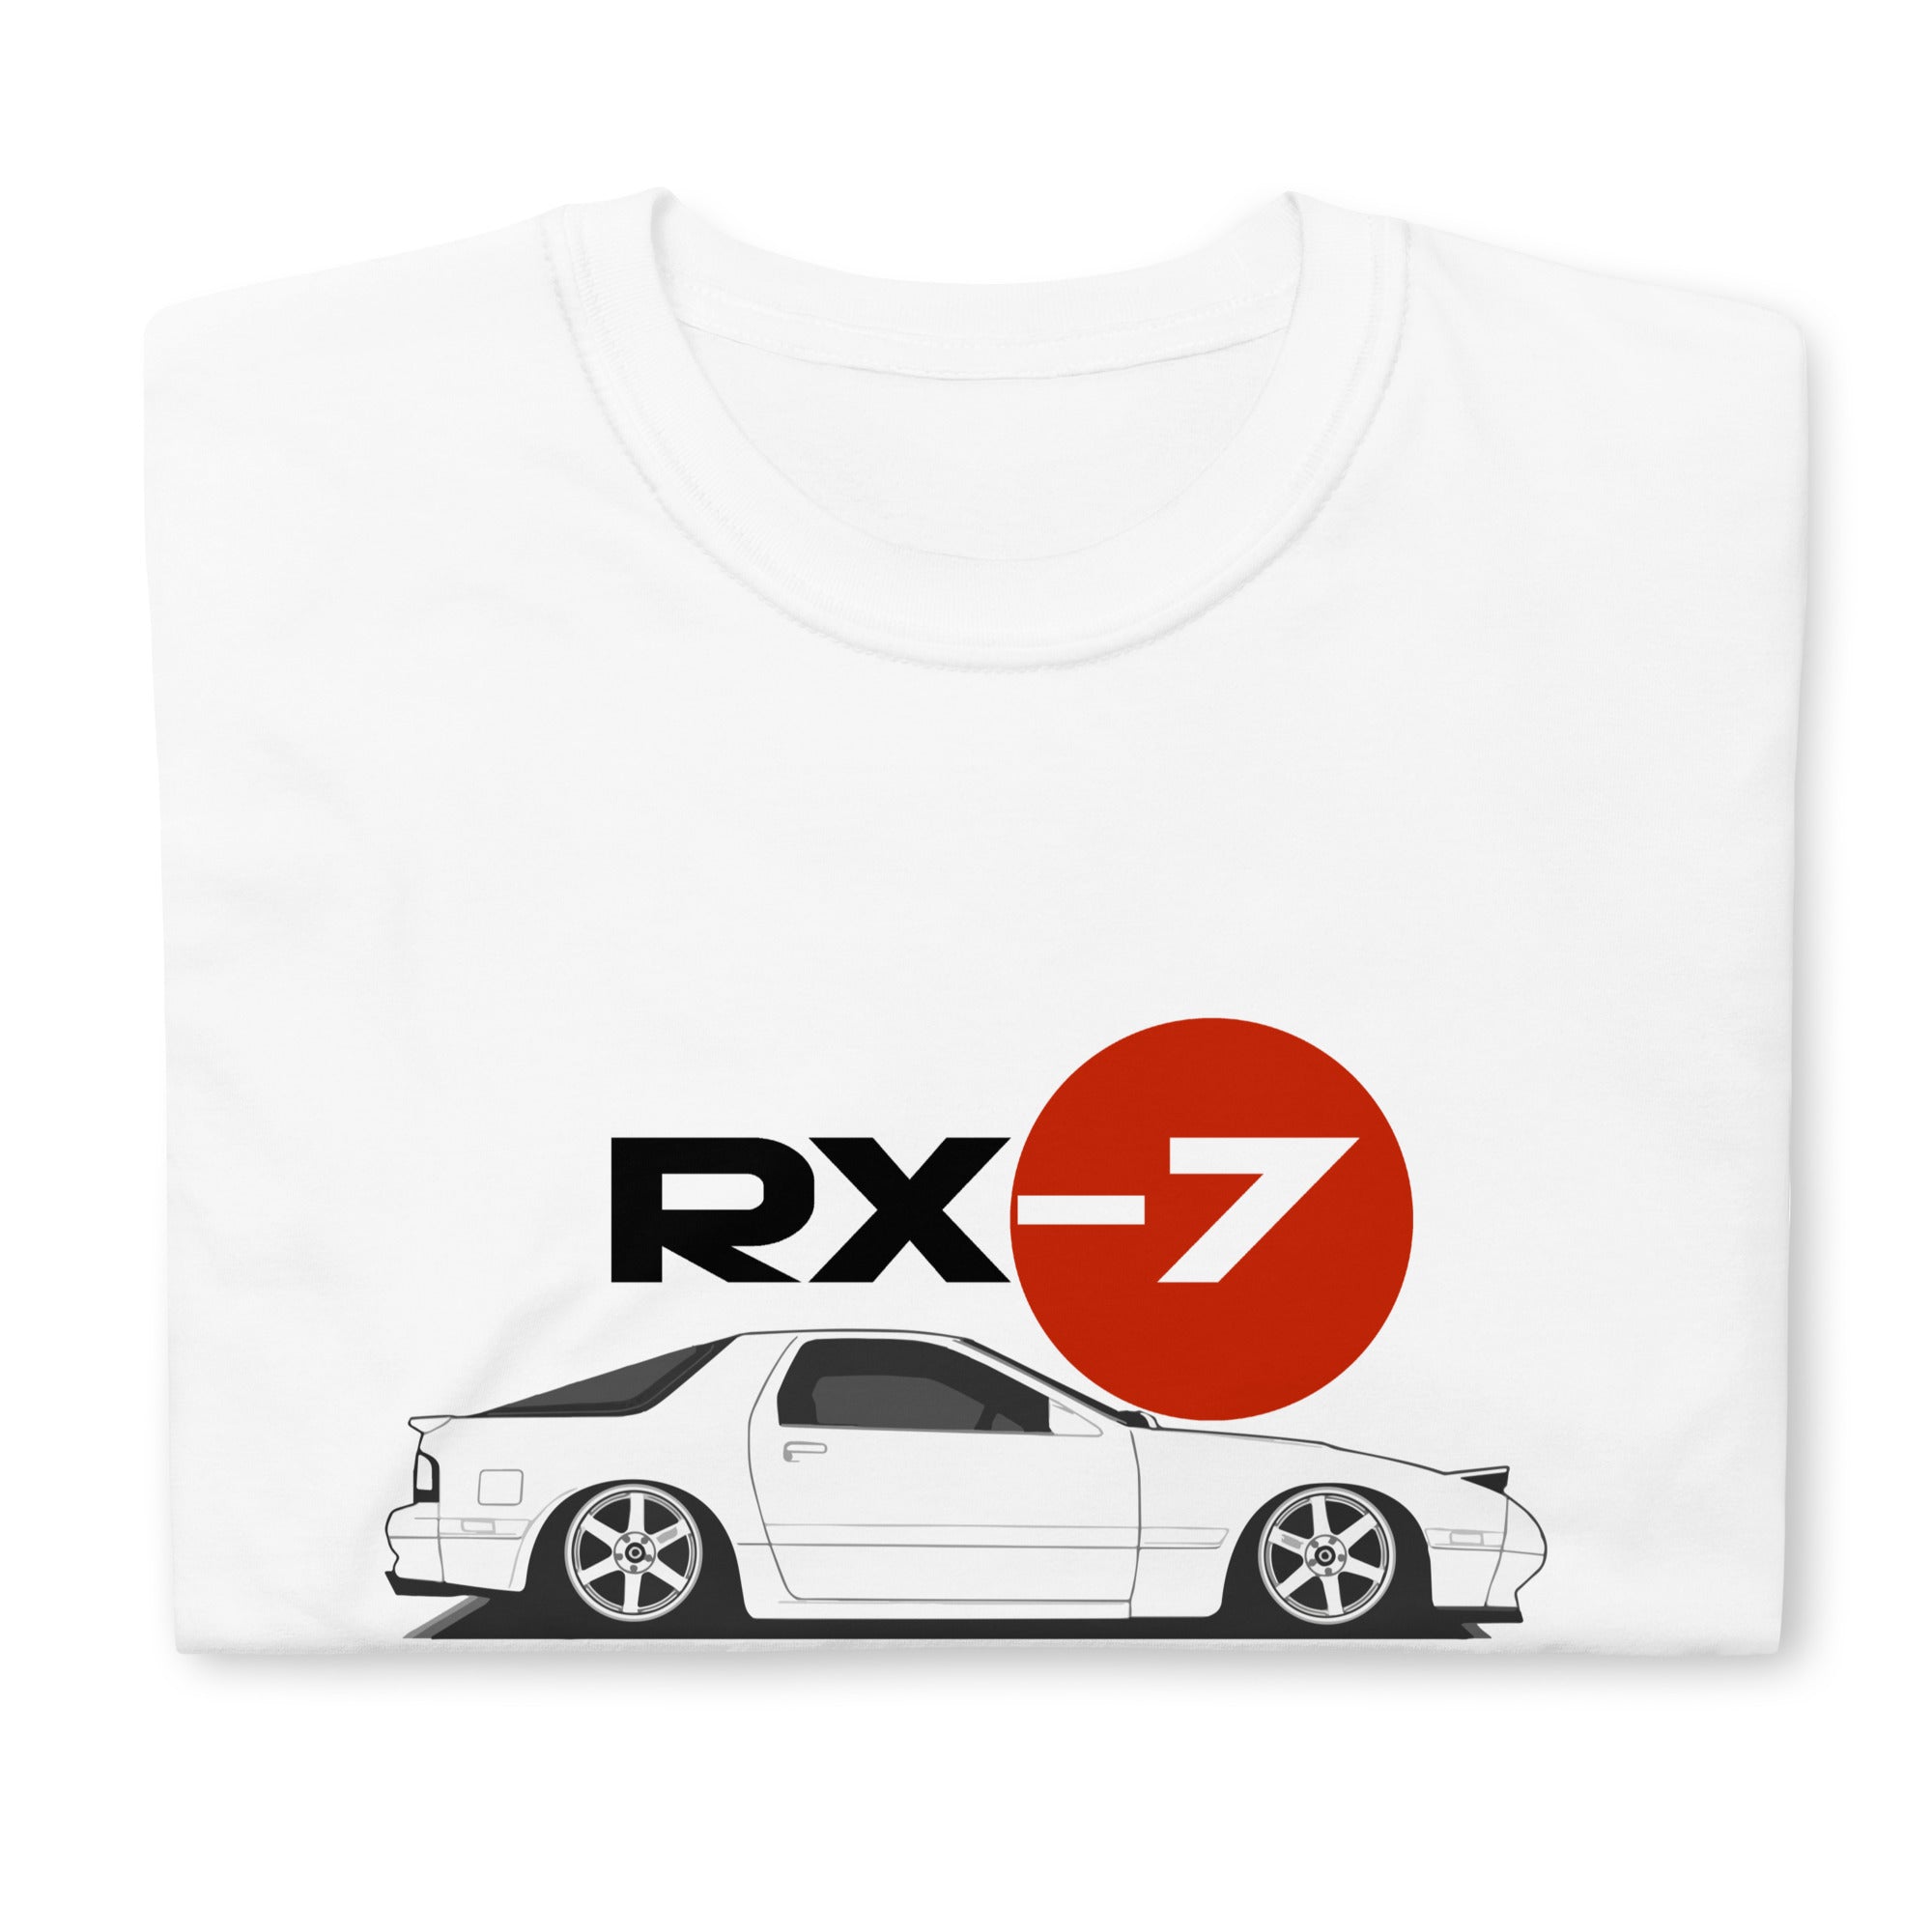 RX-7 JDM Legend RX7 Rotary Engine Tuner Car Drift Street Racing T-Shirt